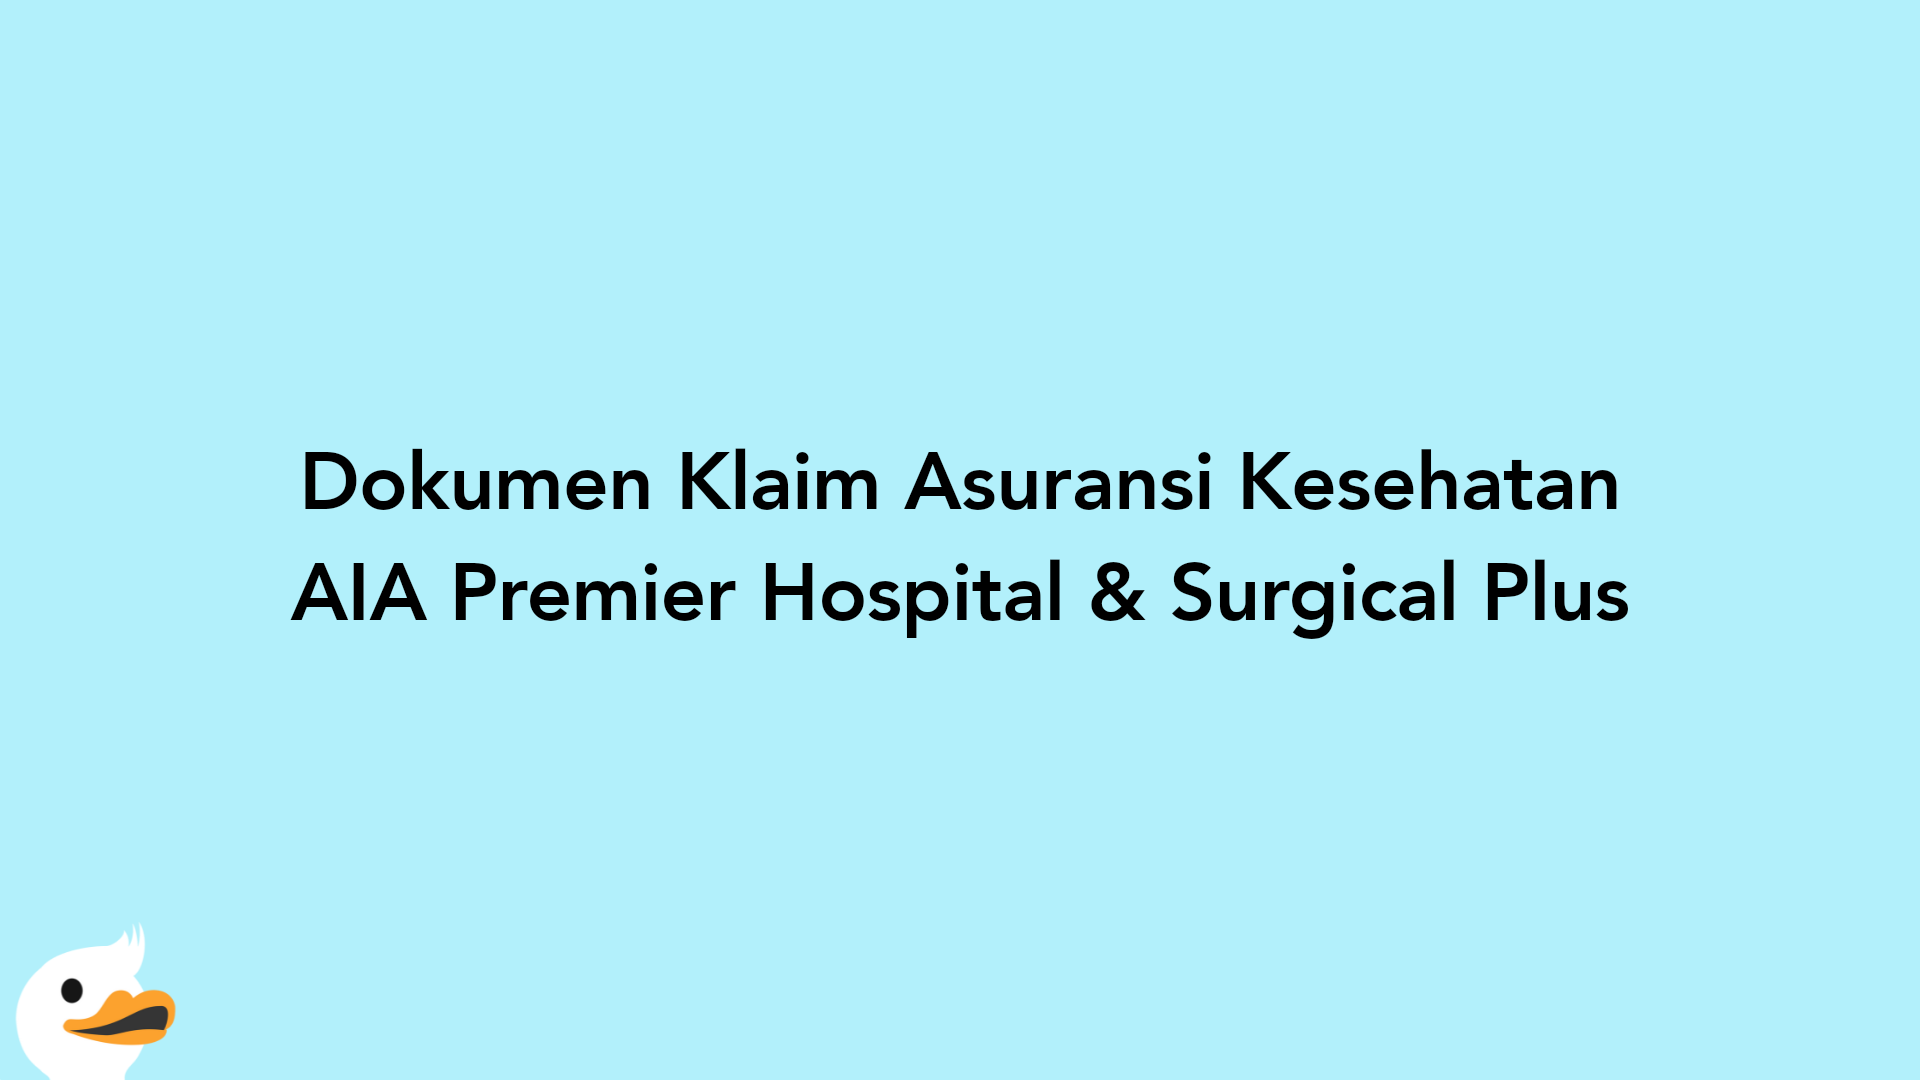 Dokumen Klaim Asuransi Kesehatan AIA Premier Hospital & Surgical Plus